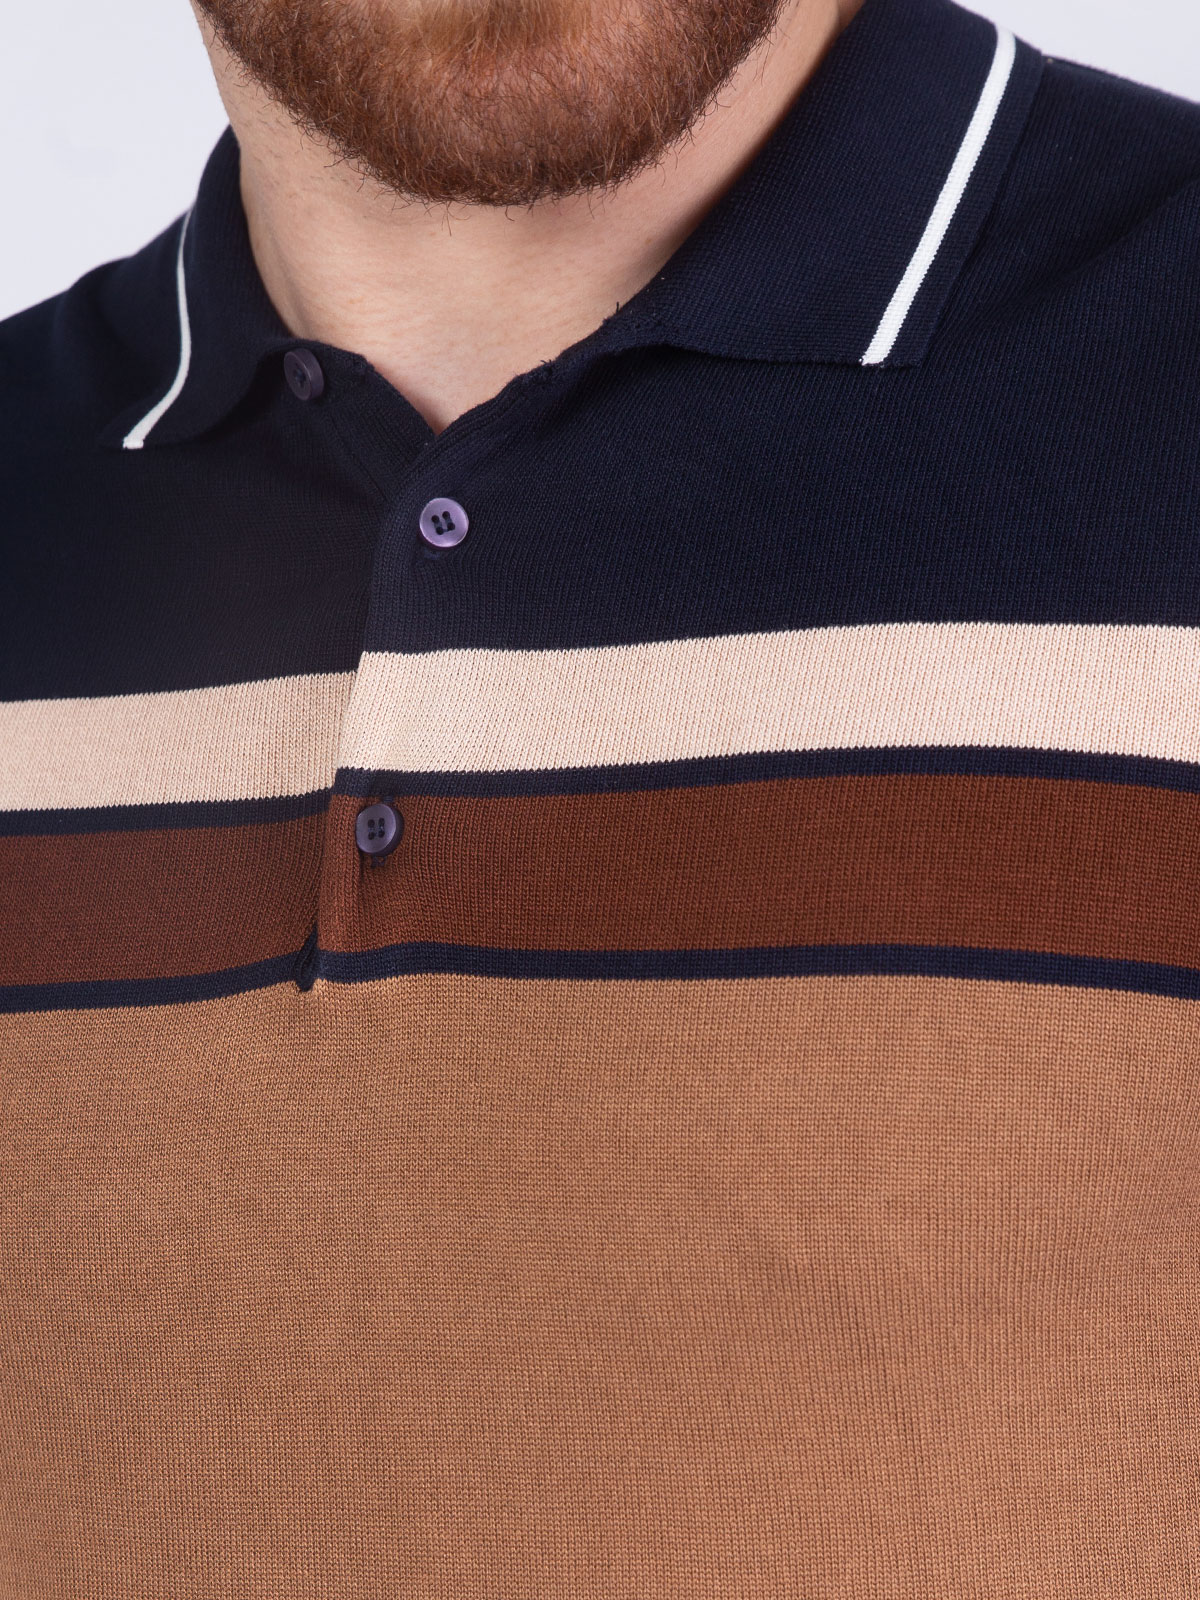 Knitted striped tshirt - 94403 € 32.06 img3